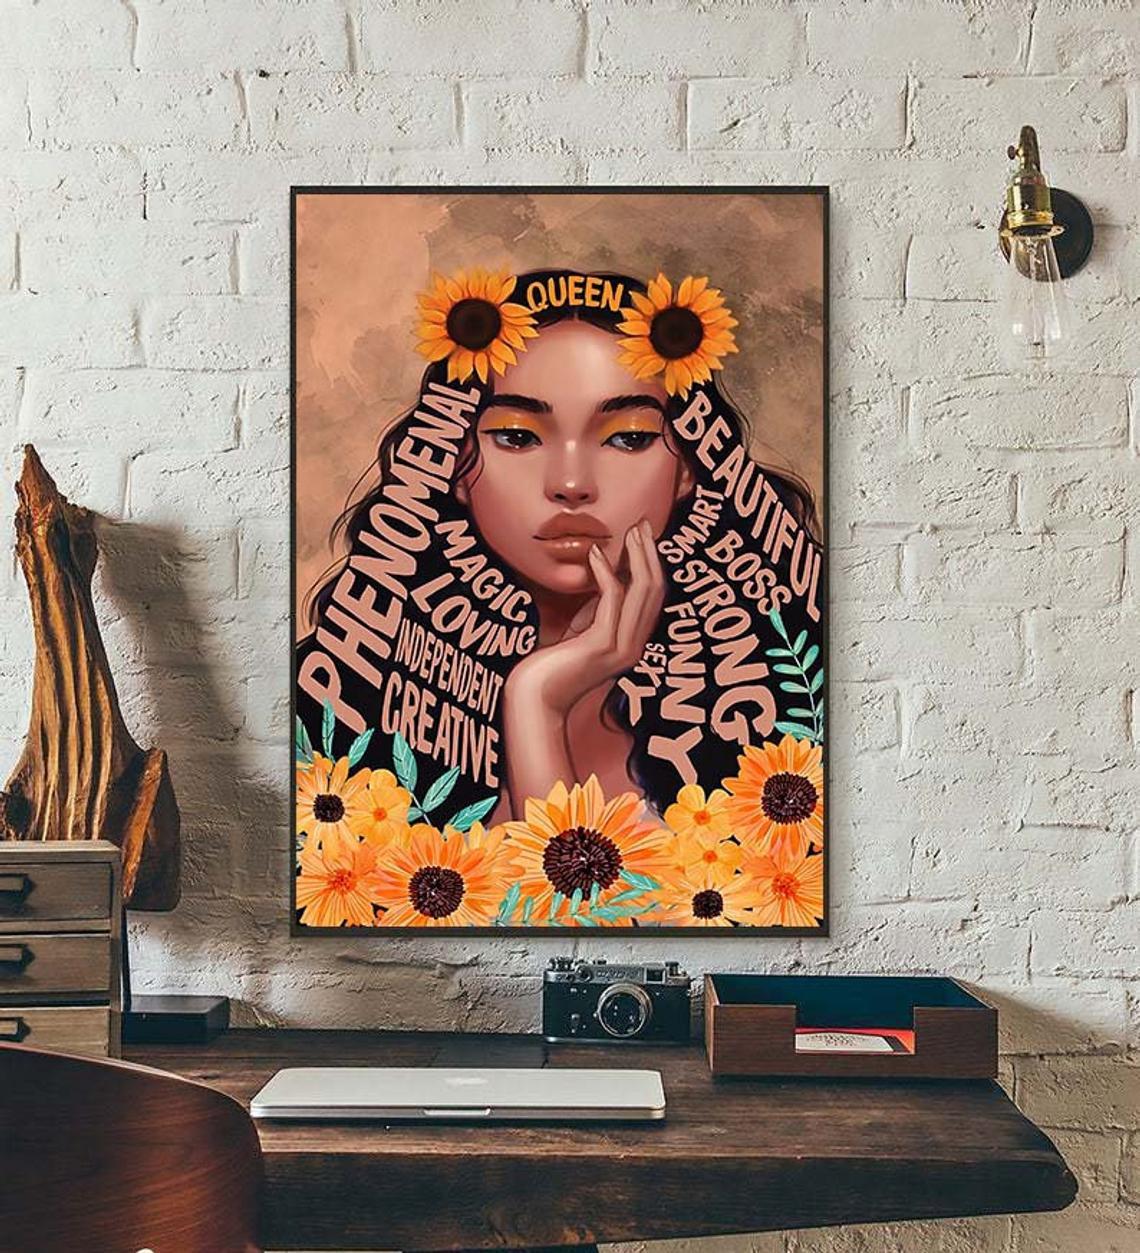 I Am Black Women Poster, Black Queen Girl Art Black Women’S Art, Black Woman Canvas And Poster